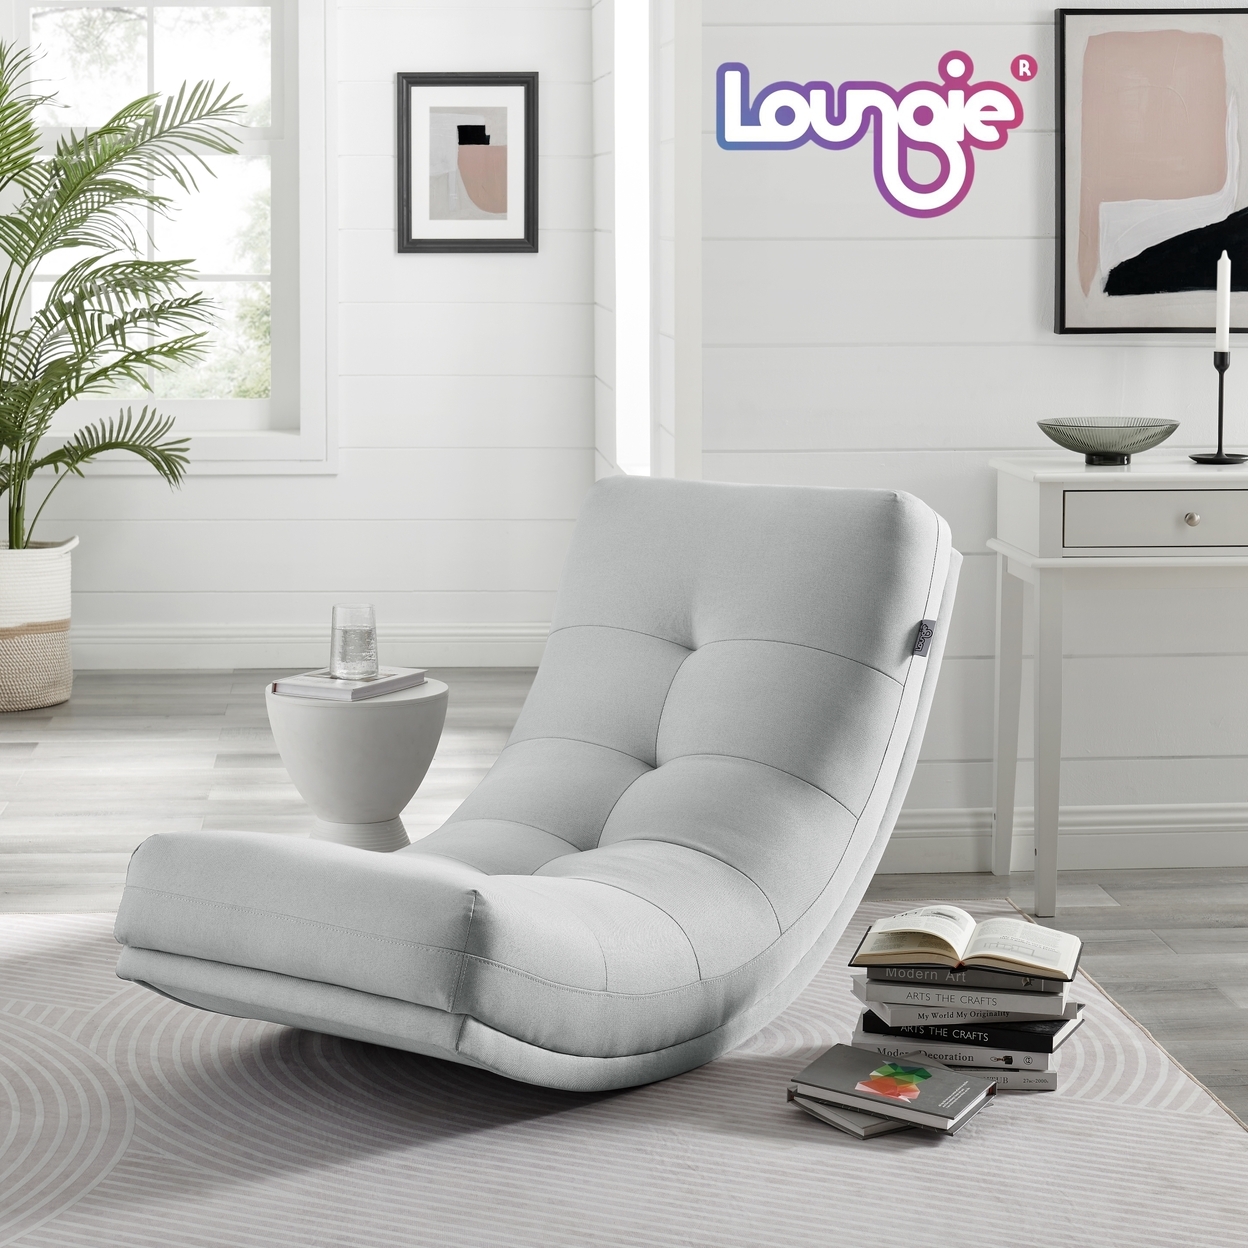 Kaniya Chair - Linen Upholstery, Tufted, Gentle Rocking Design, Ergonomic Shape And Padded Seat - Grey